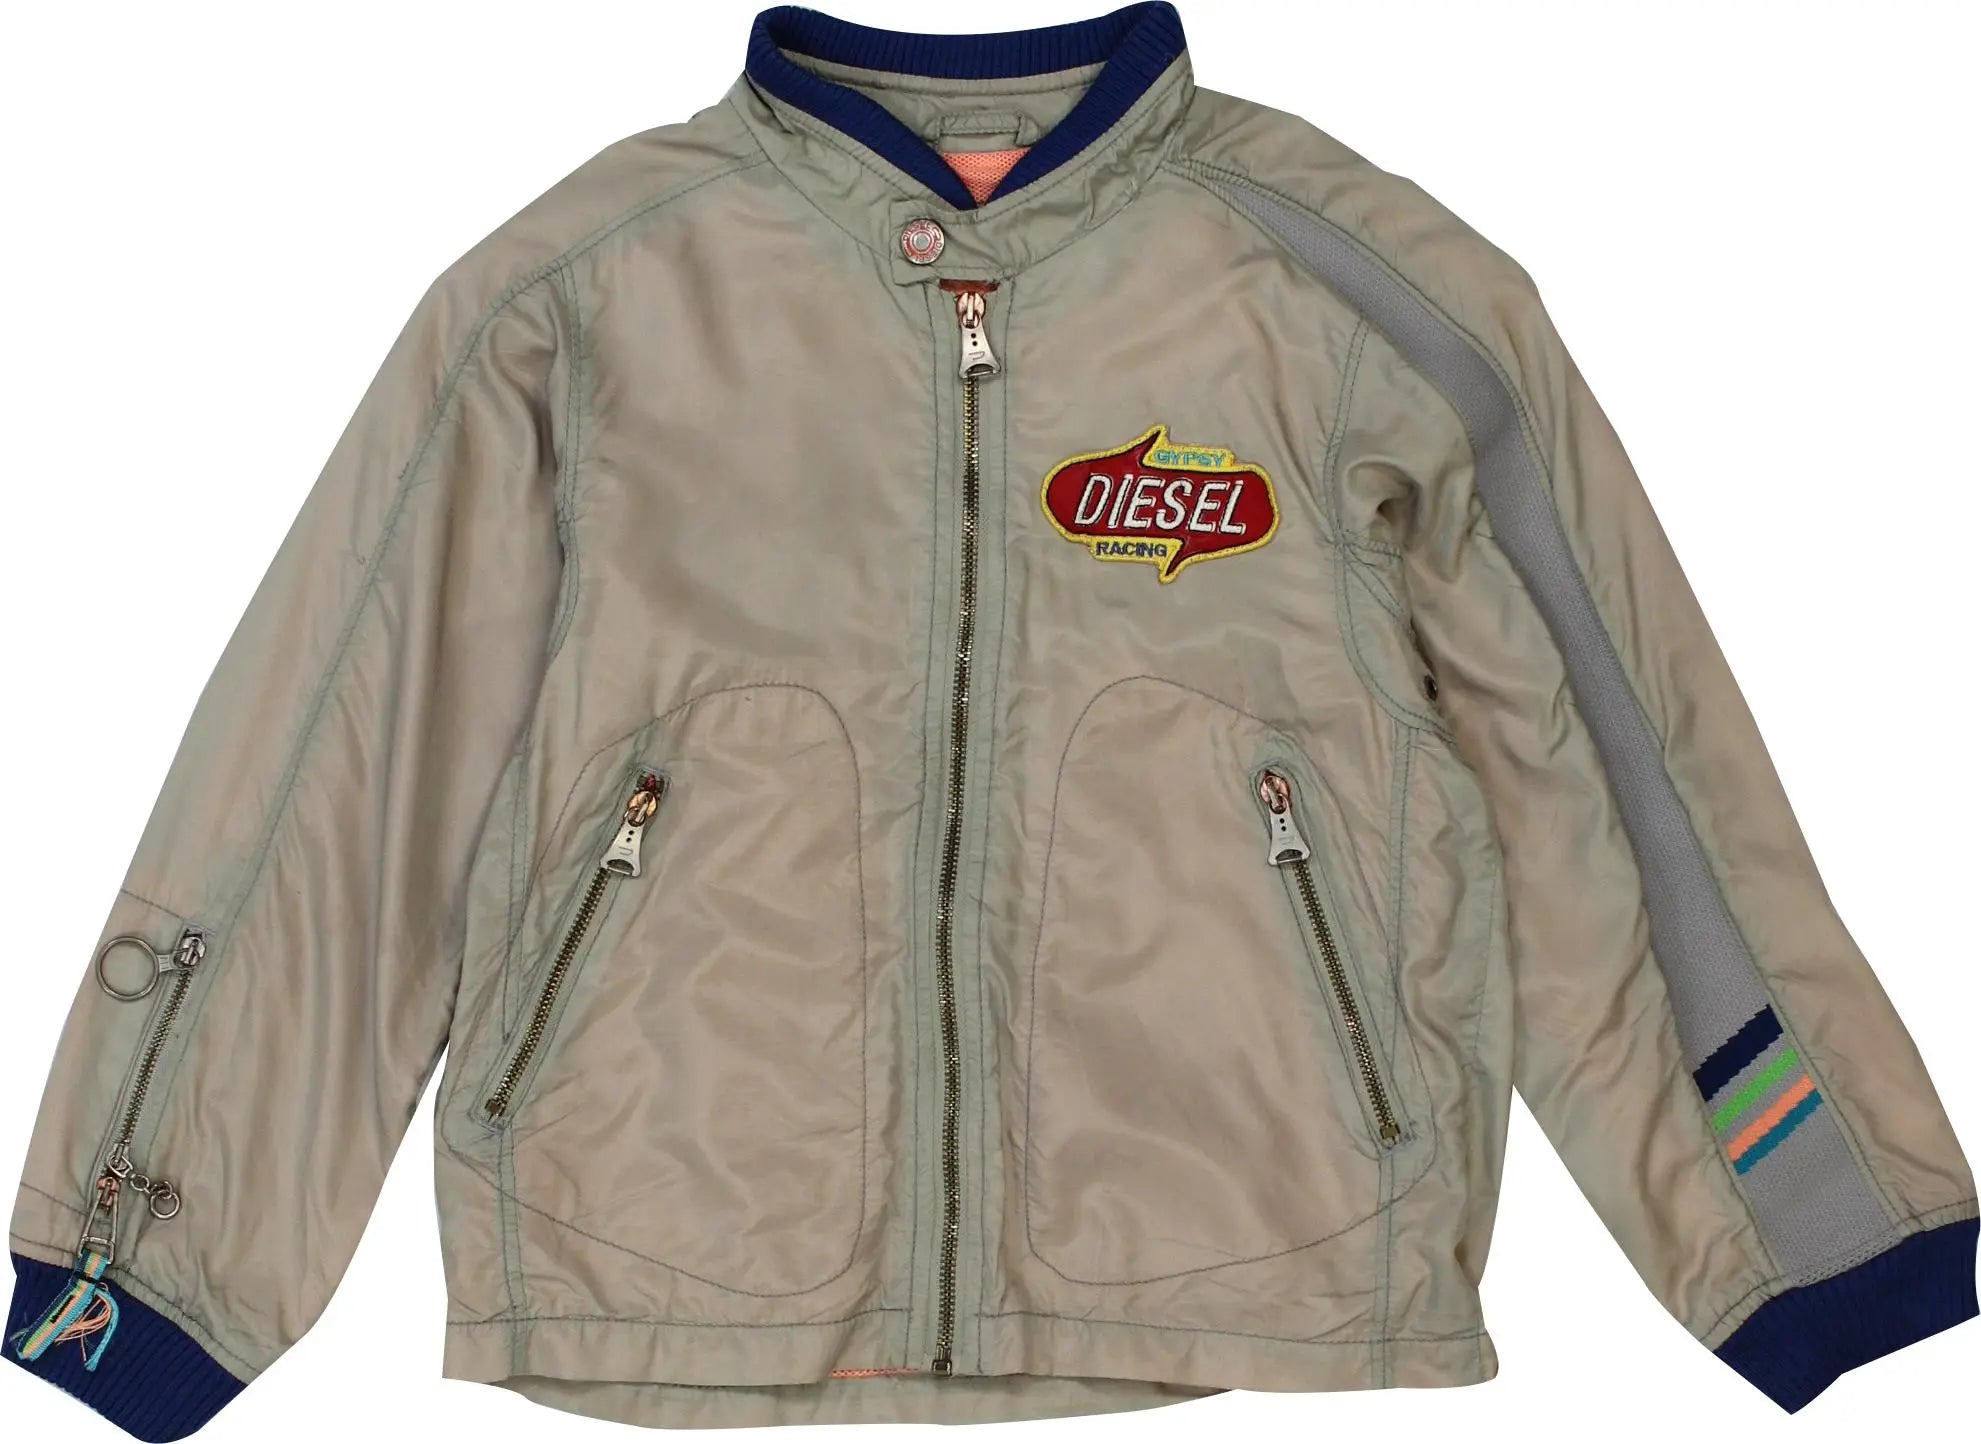 Diesel - Beige Jacket by Diesel- ThriftTale.com - Vintage and second handclothing